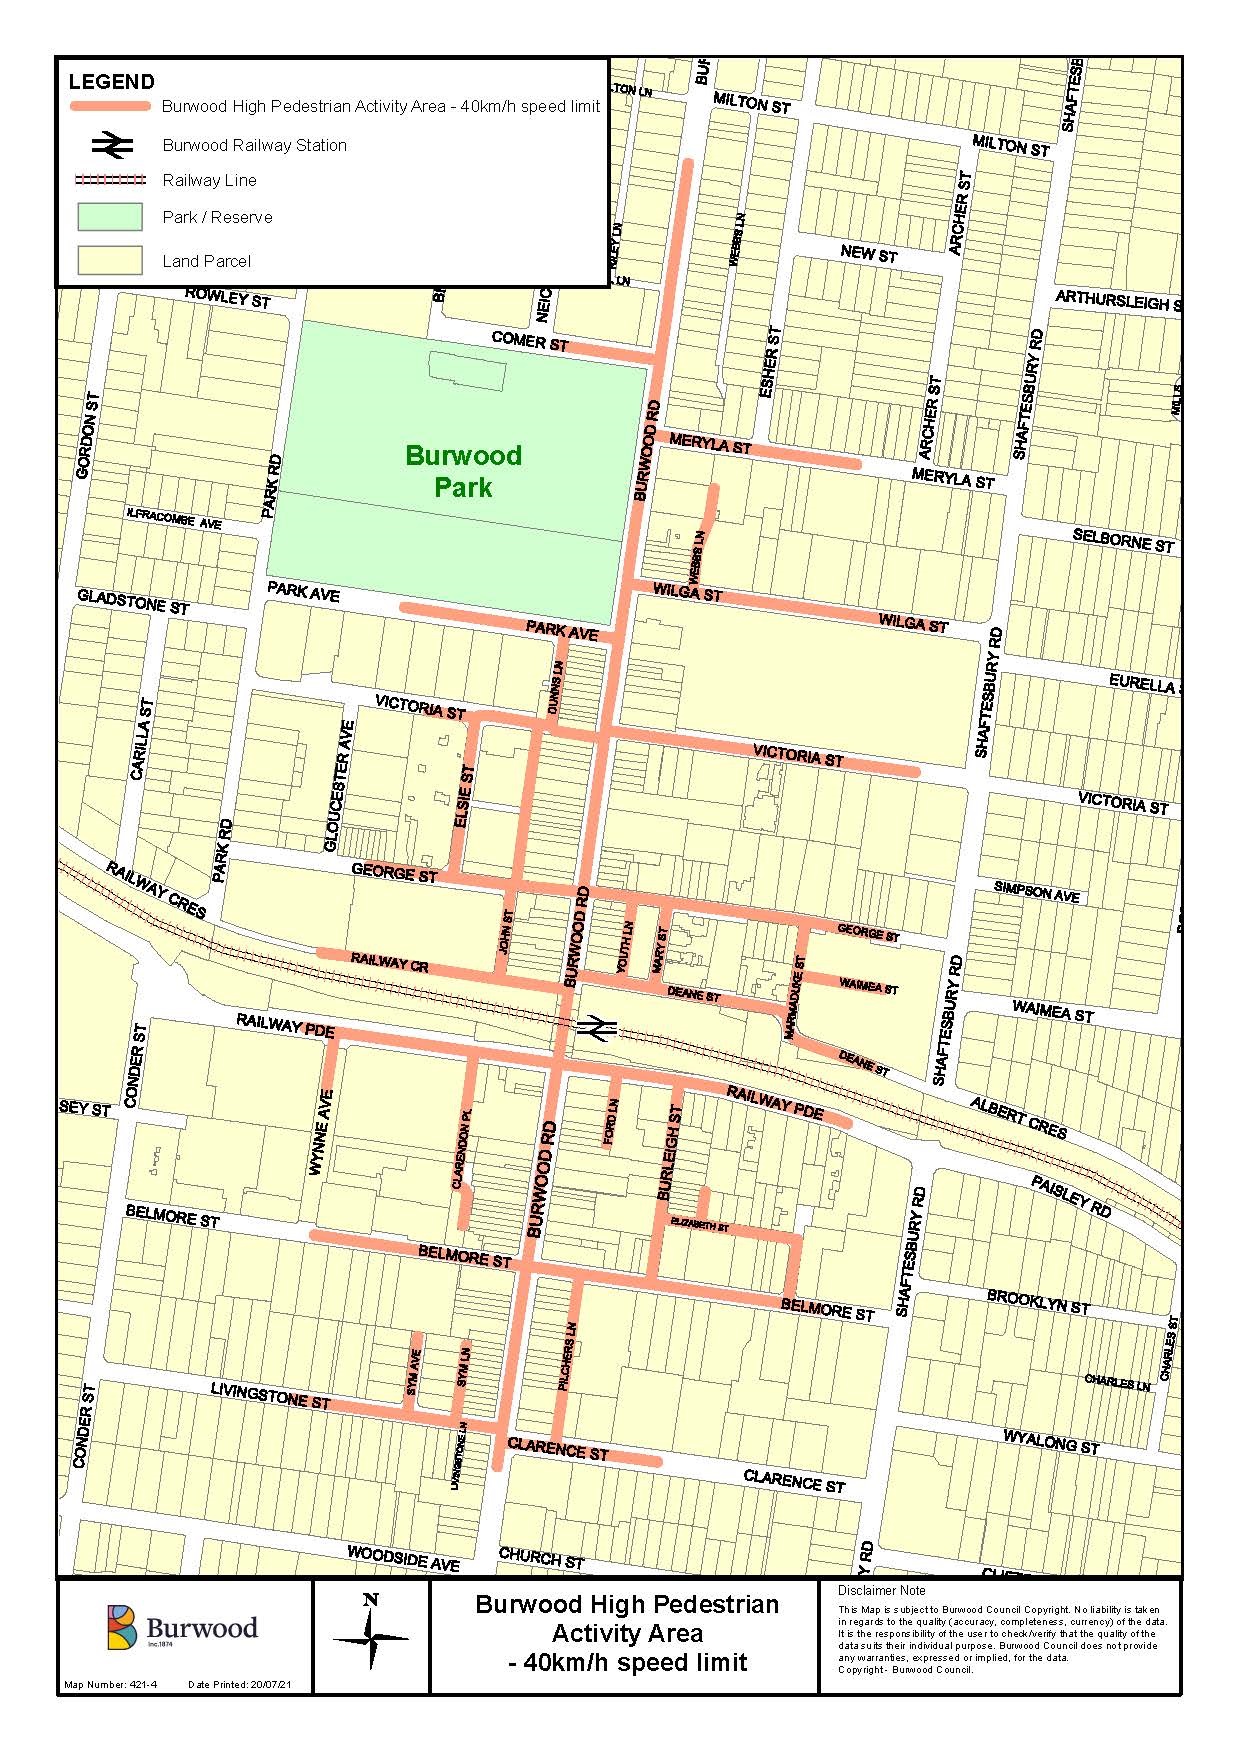 Burwood High Pedestrian Activity Area Map